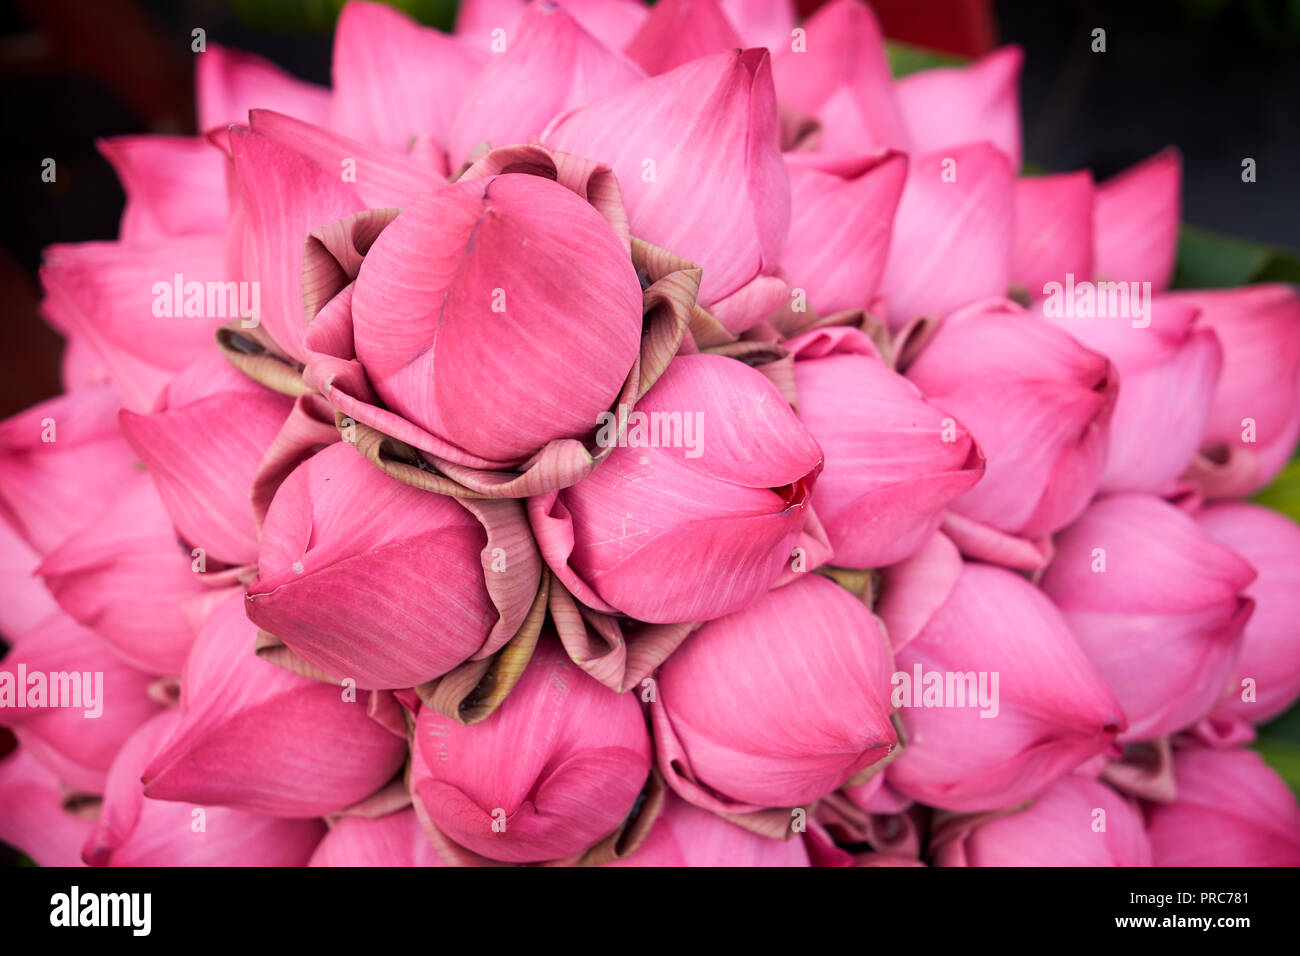 Kambodscha blumen Psar Thmei markt Phnom Penh Lotus Blumen Stockfoto